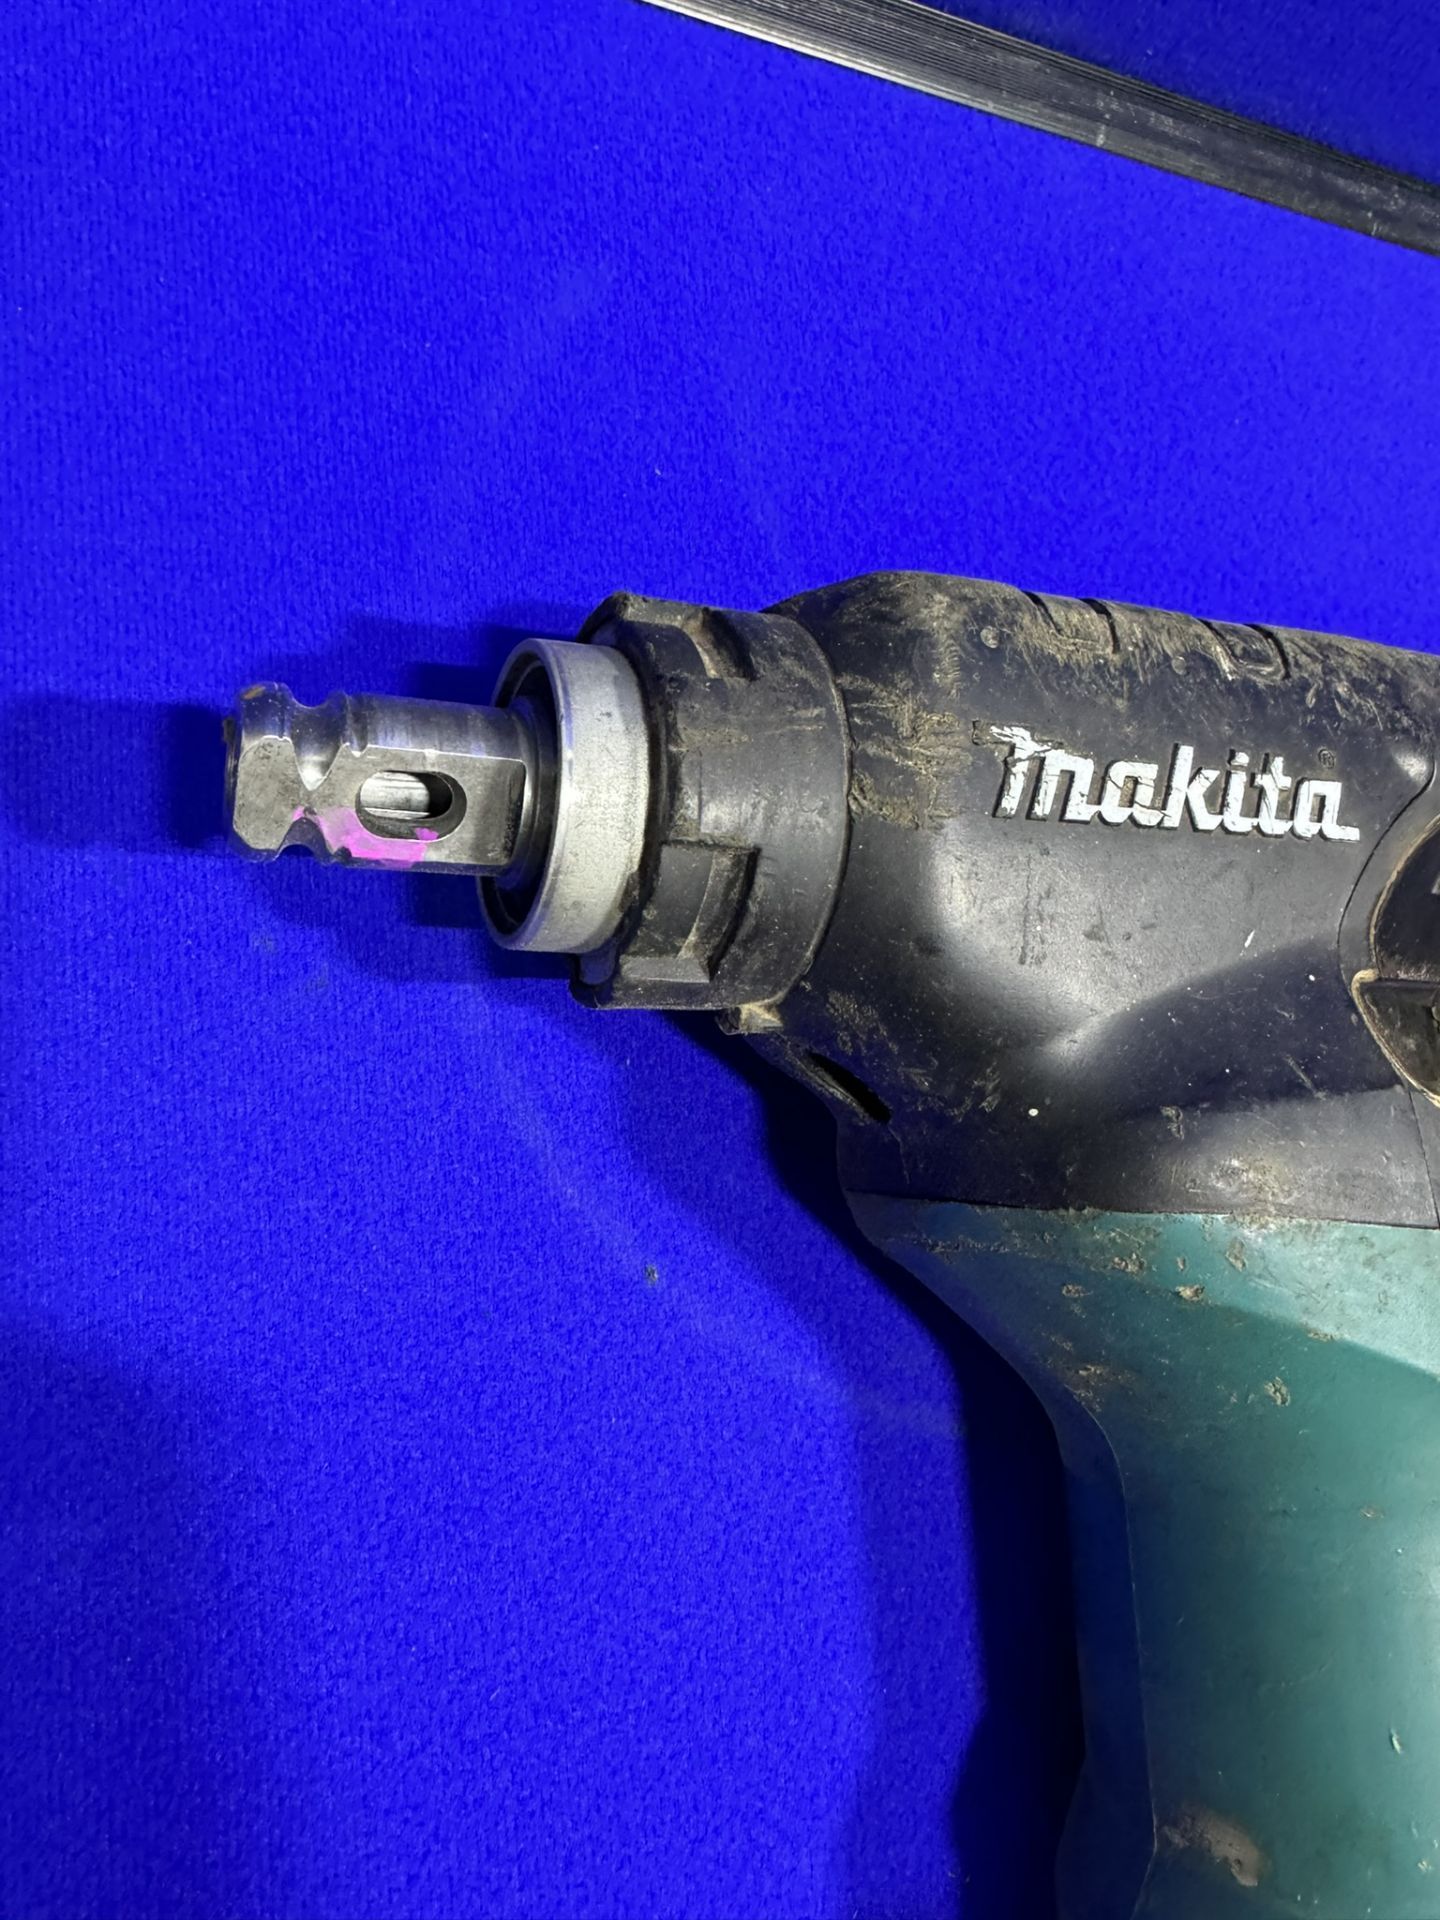 Makita HR2811F SDS-Plus Rotary Hammer - Image 2 of 4